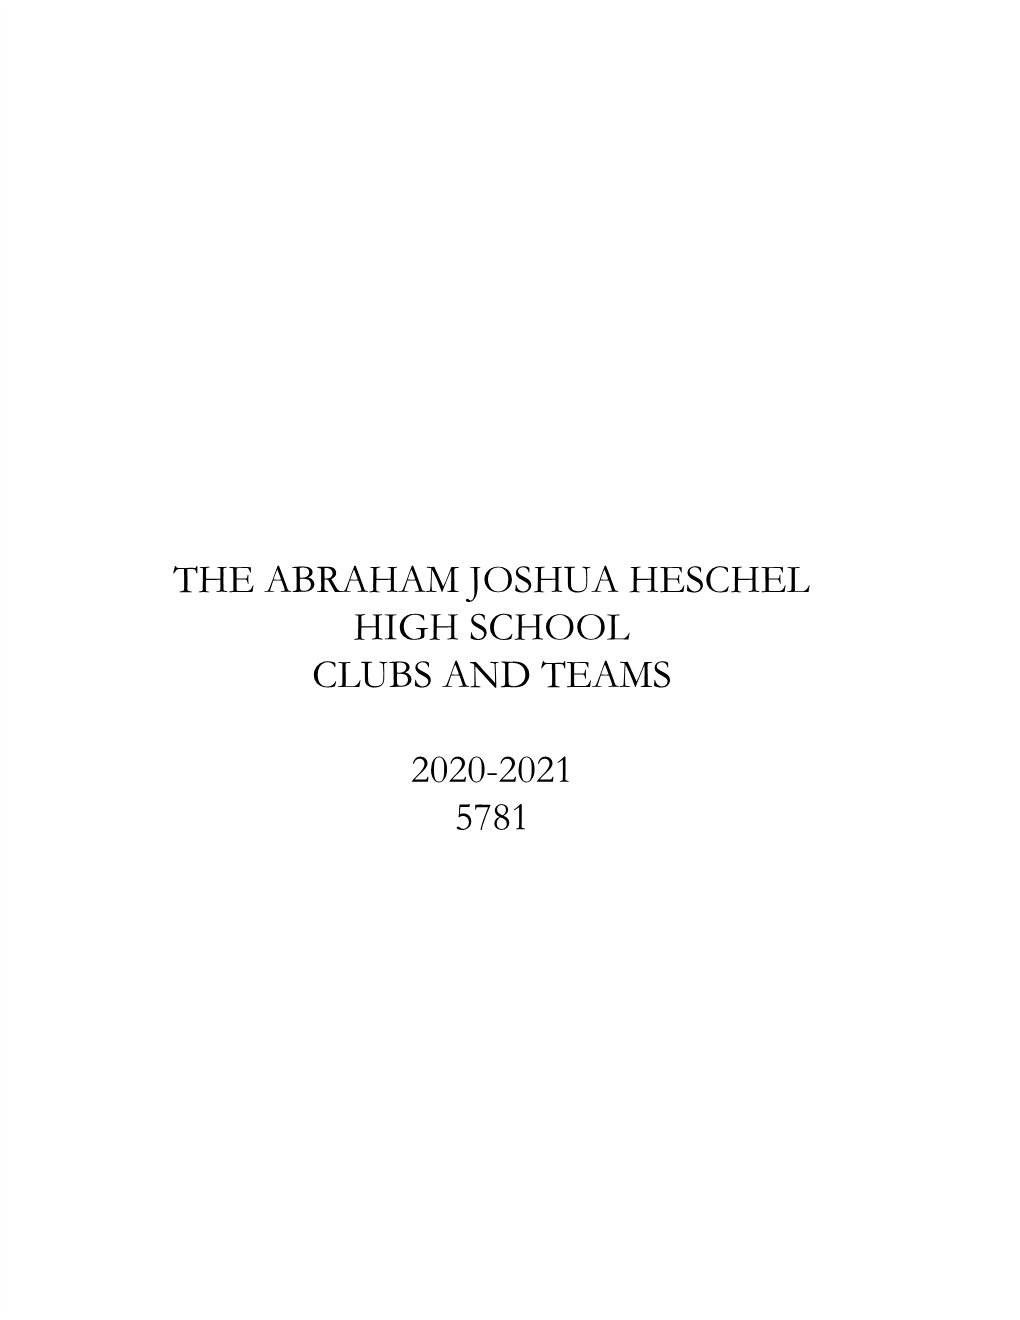 The Abraham Joshua Heschel High School Clubs and Teams 2020-2021